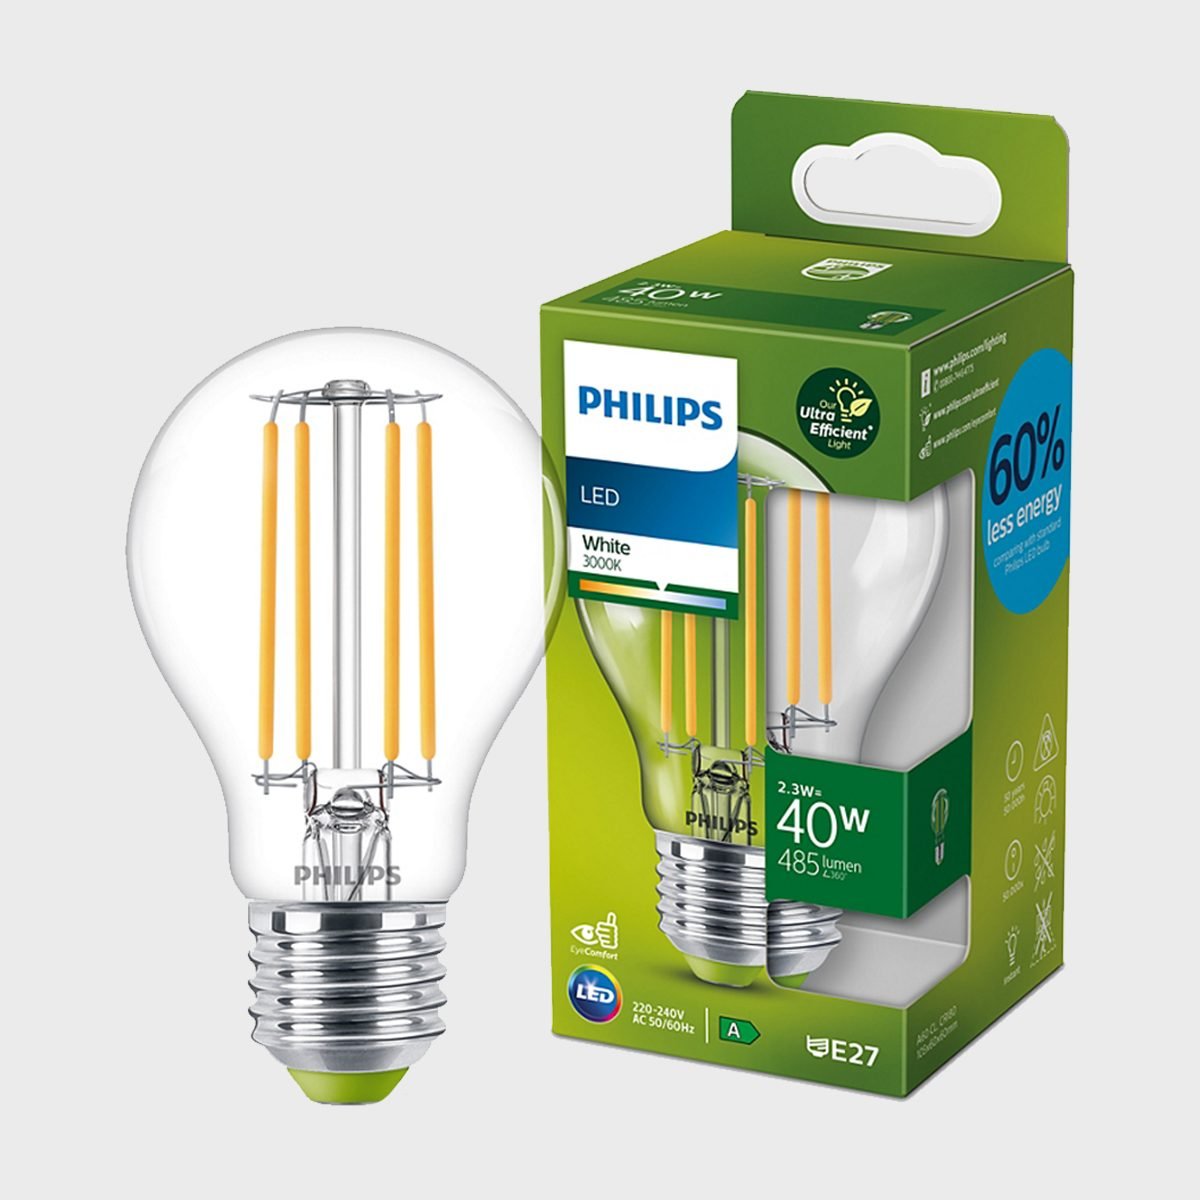 Ultra efficient  Philips lighting